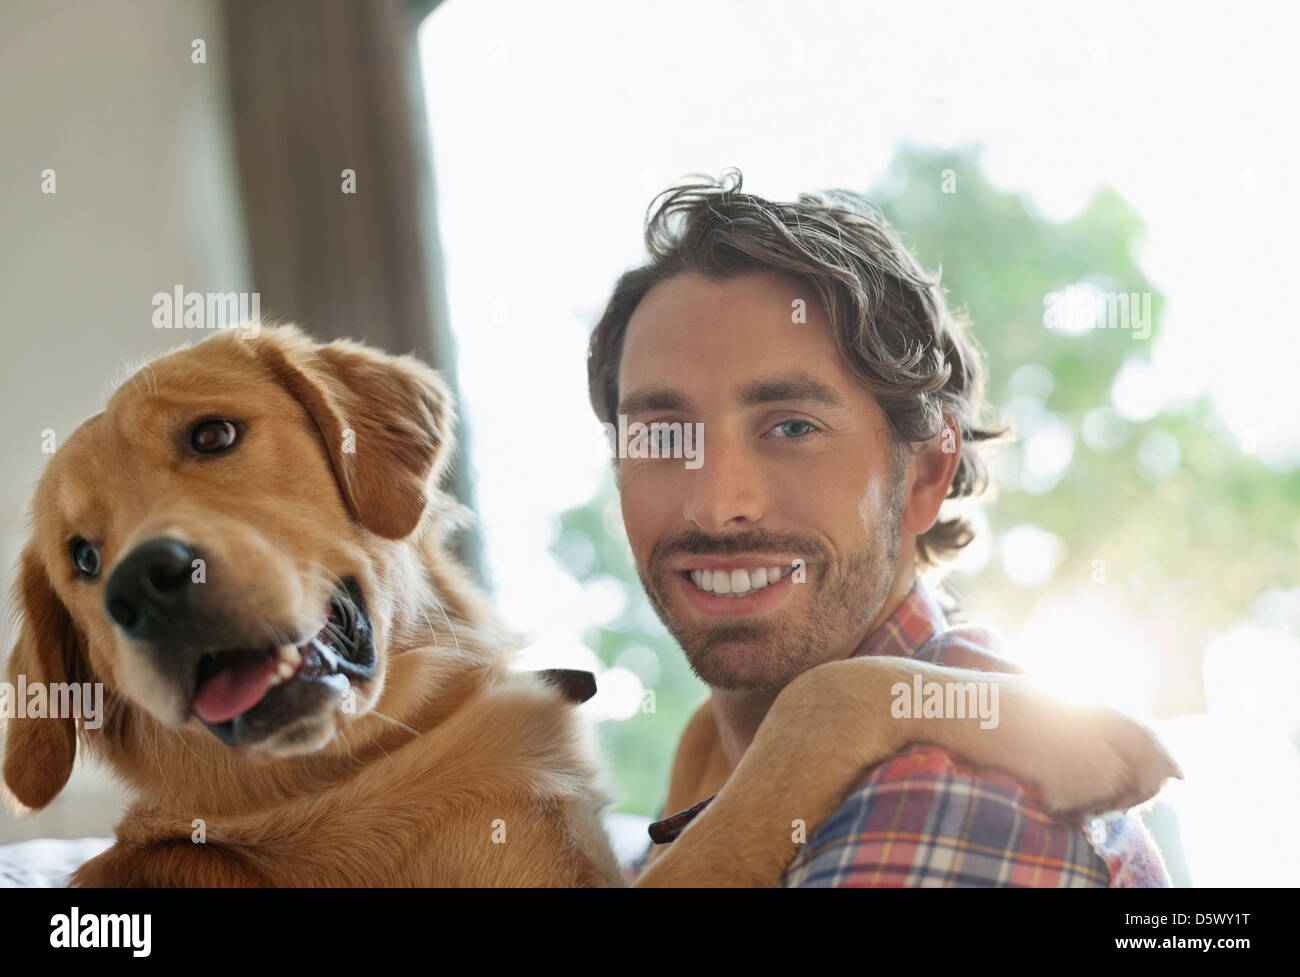 Smiling man petting dog indoors Stock Photo